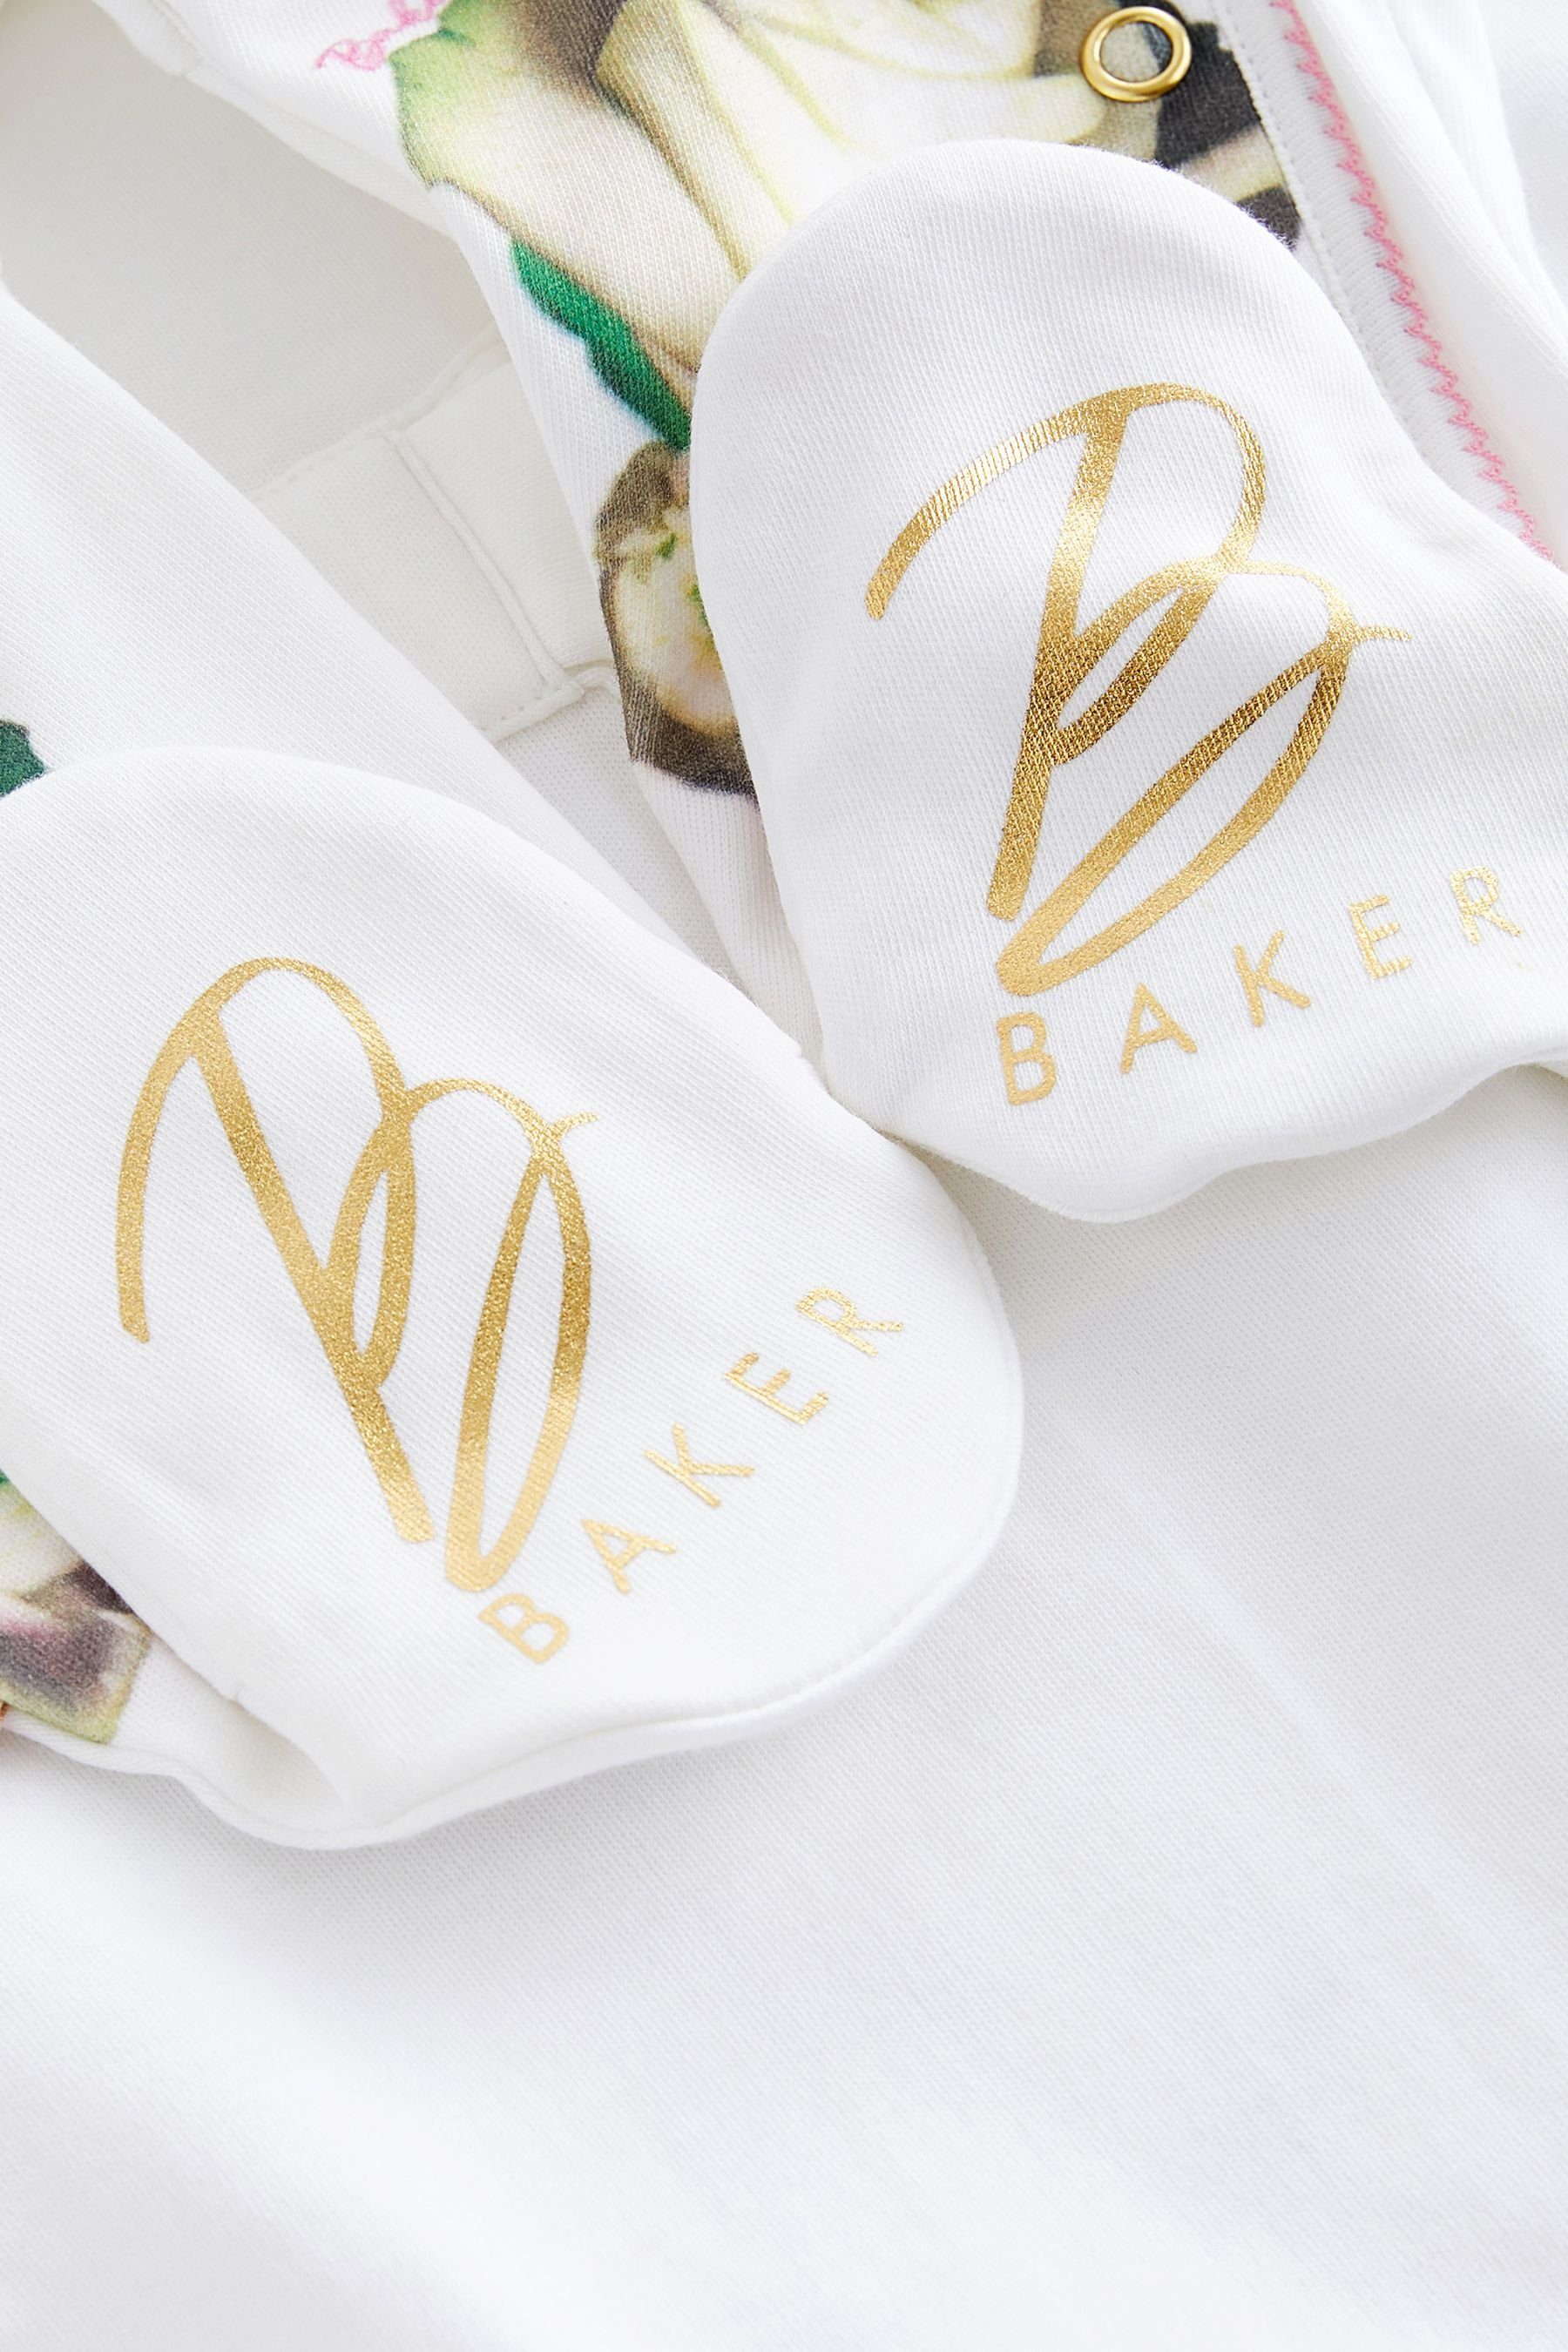 (2-tlg) Baker Baker by Baker mit Baker Ted Schlafoverall Schlafanzug Geblümter by Mütze Ted